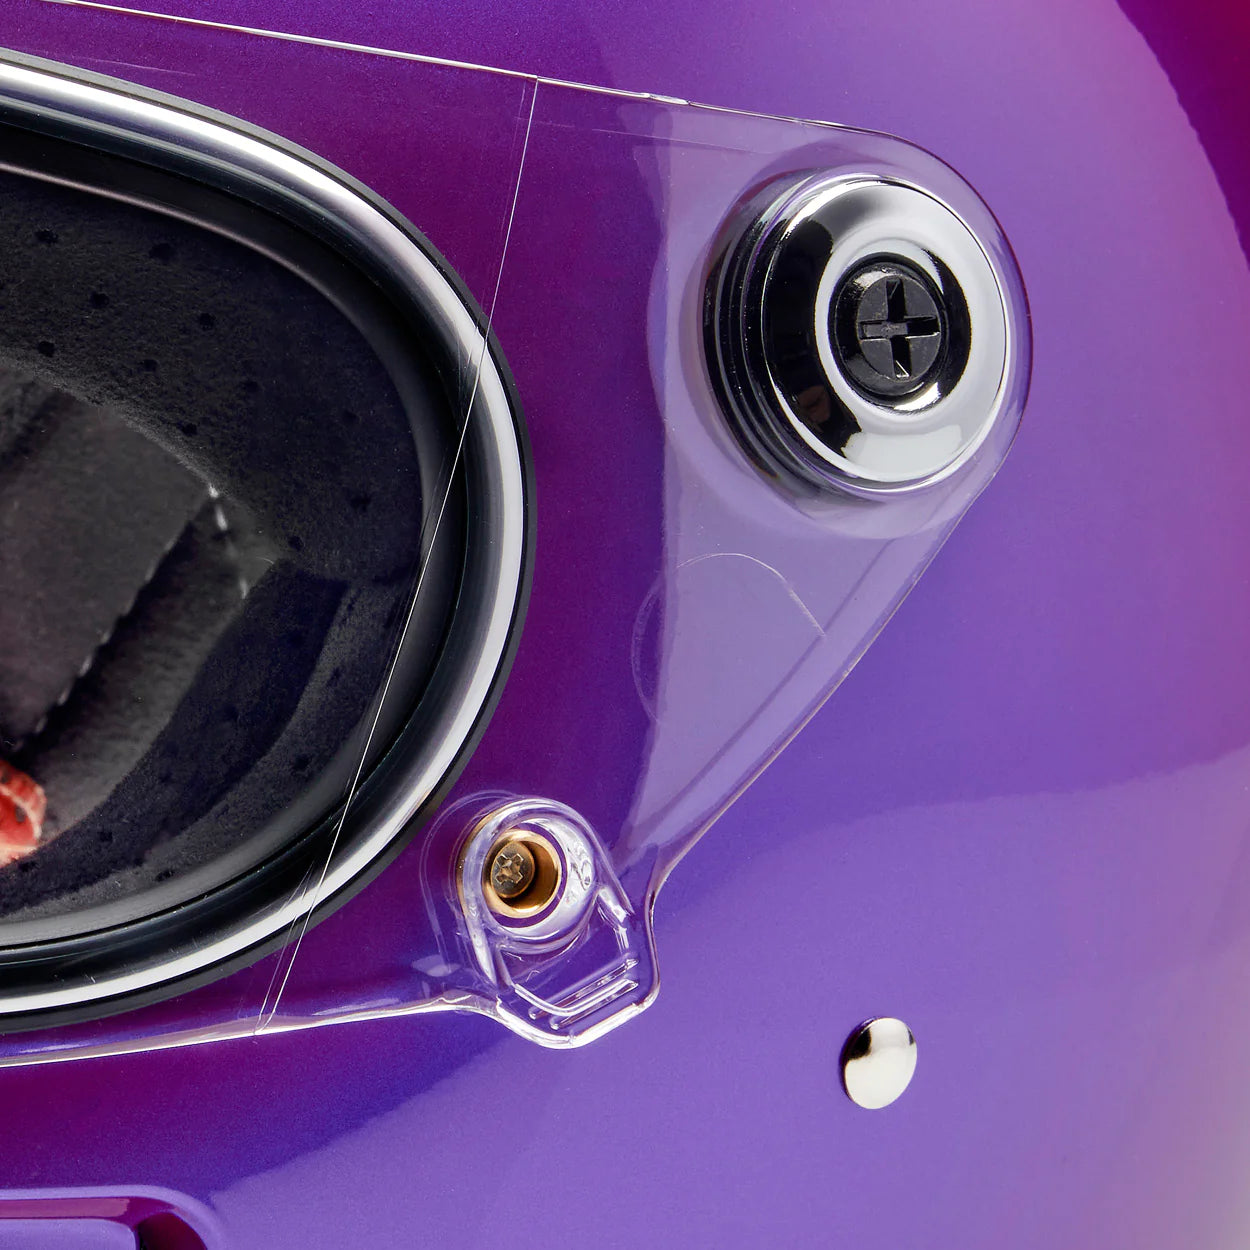 Biltwell Gringo SV Purple Grape Helmet Custom Rogue Motorcycles Perth